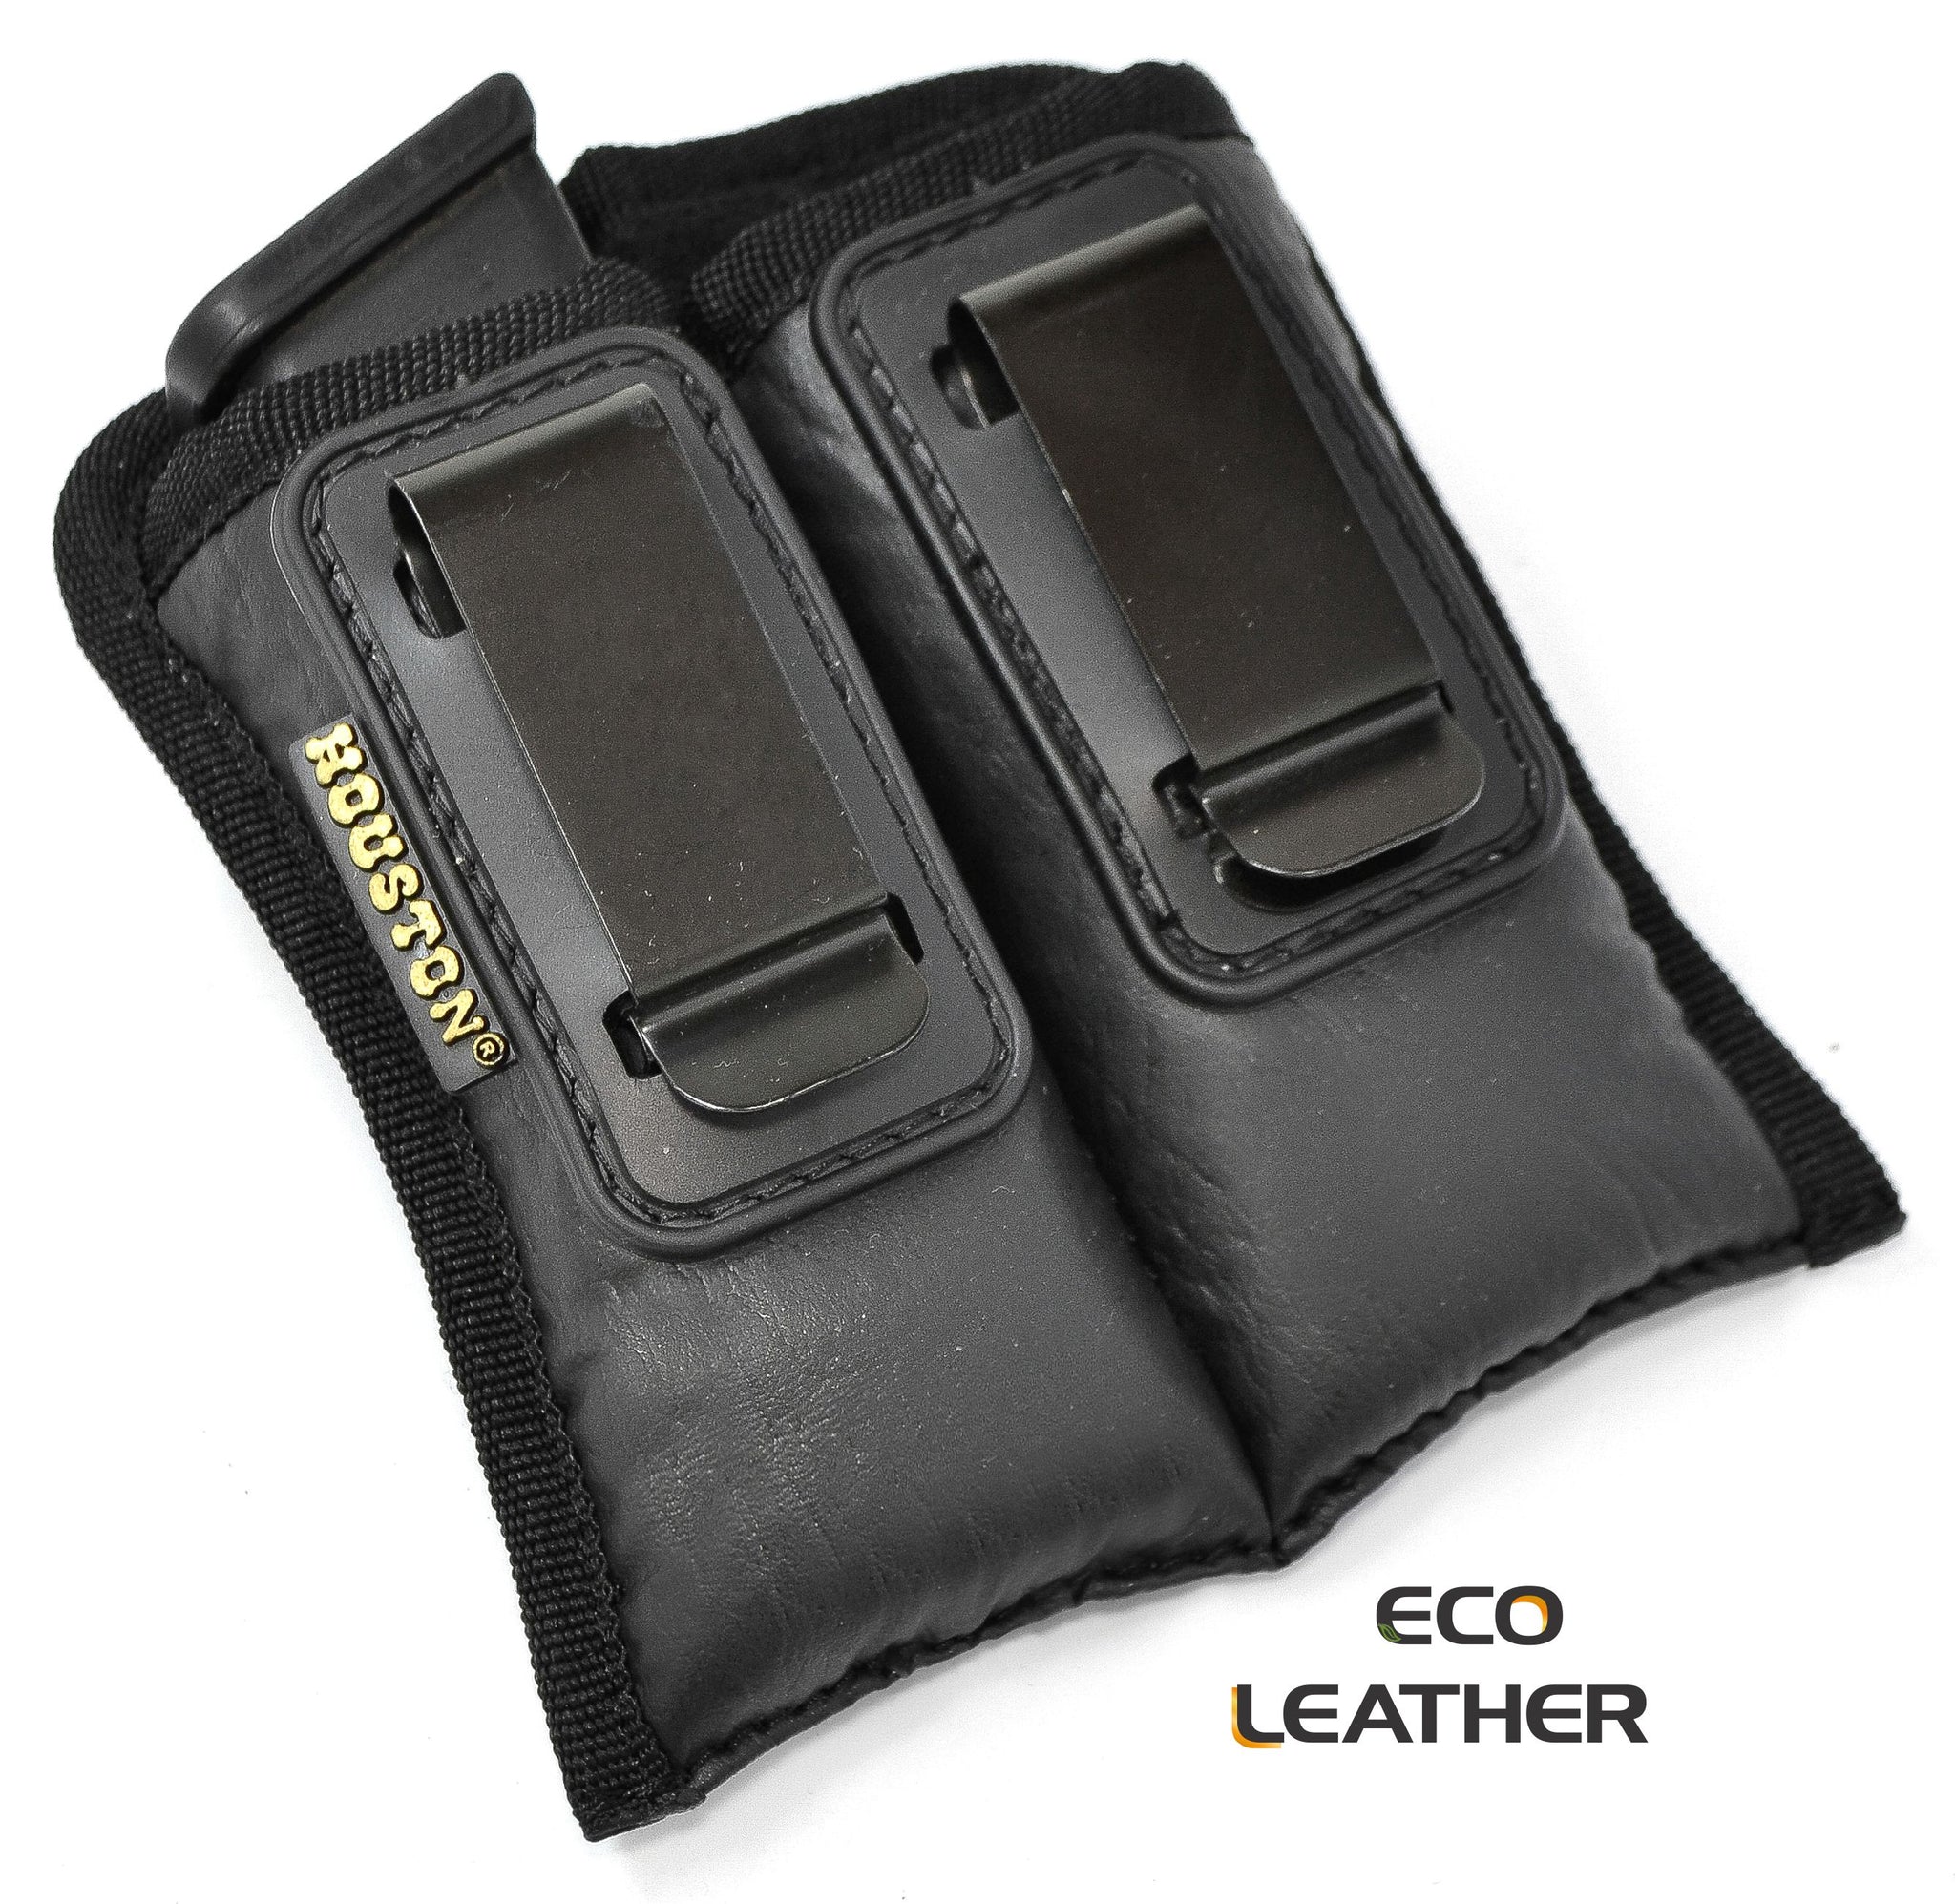 Eco leather phone holder